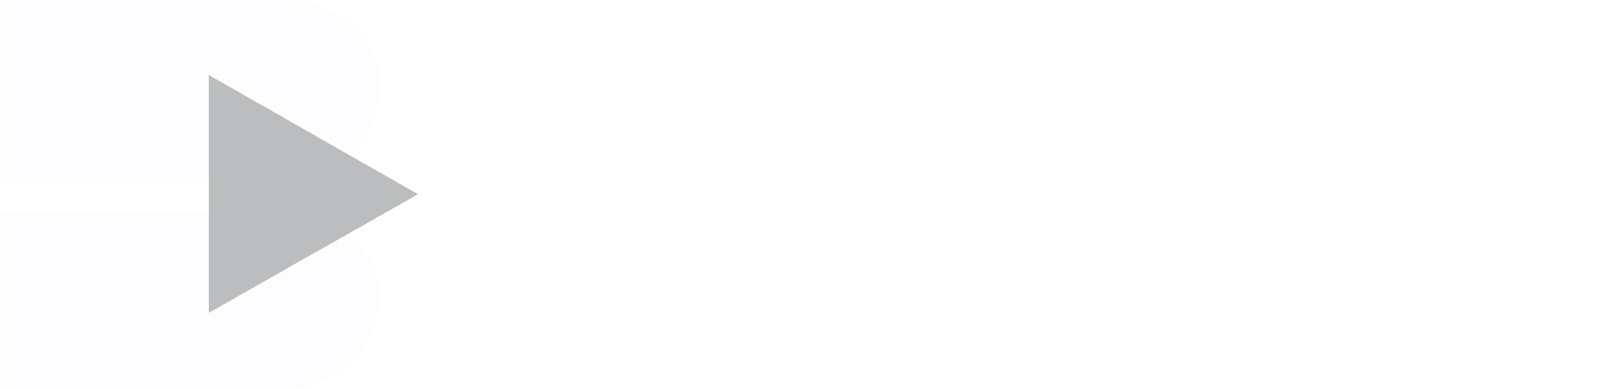 The Bidvest Group Logo groß für dunkle Hintergründe (transparentes PNG)